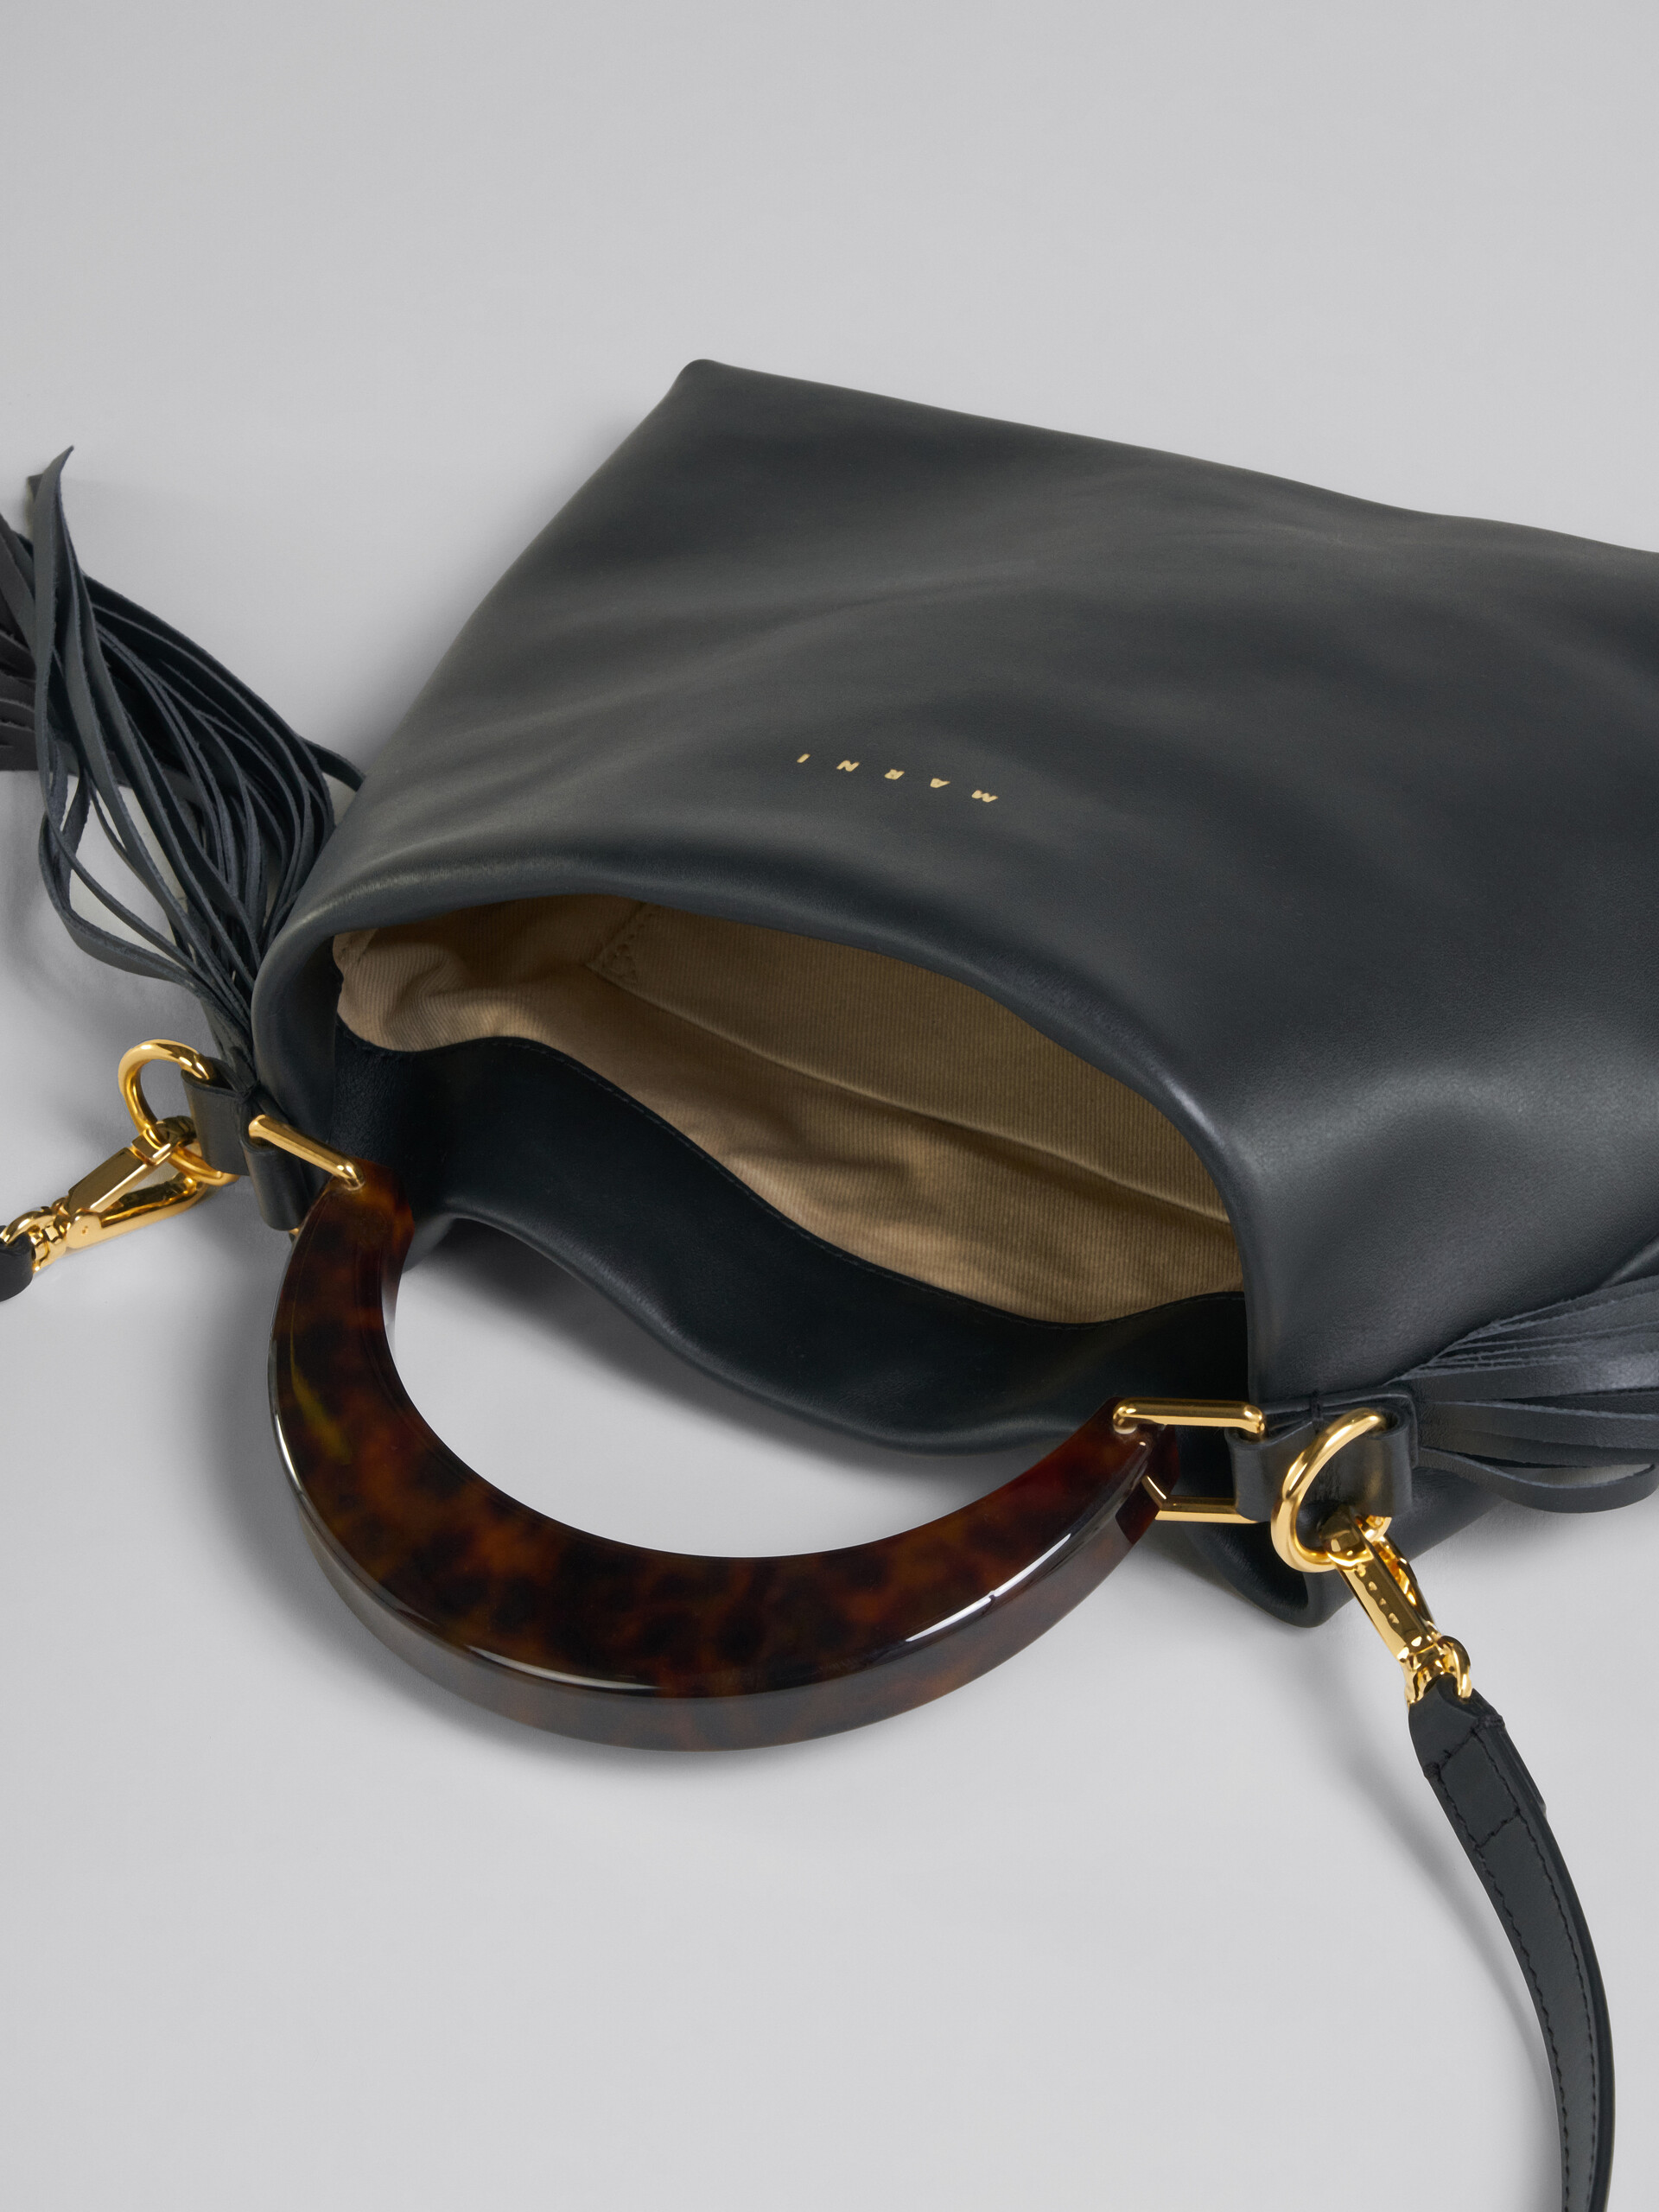 Venice Small Bag in black leather with fringes - Shoulder Bag - Image 4